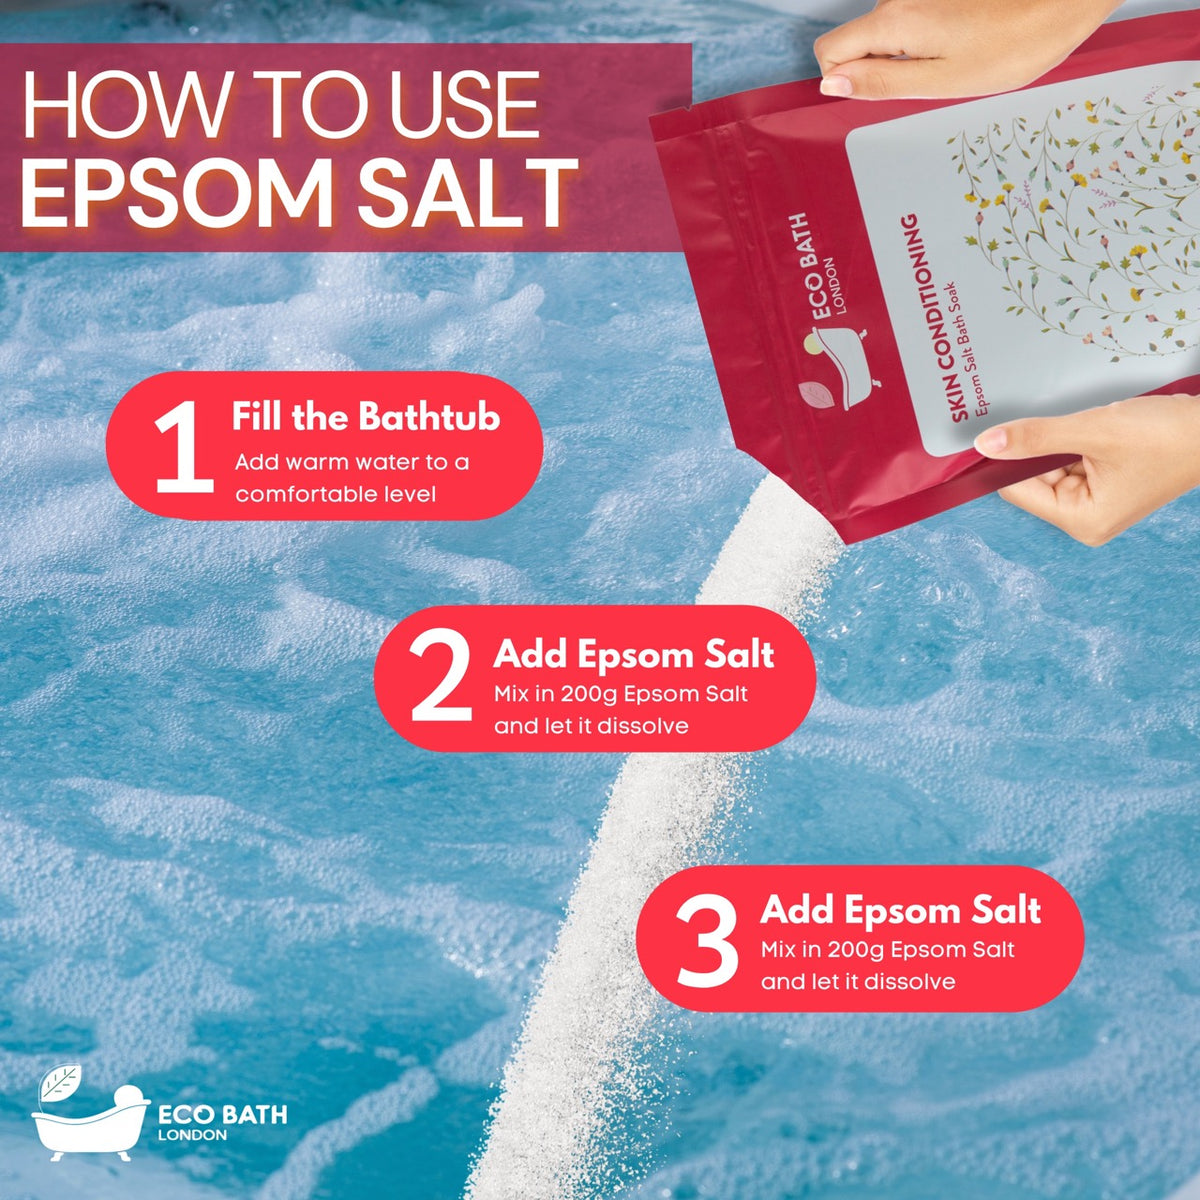 Skin Conditioning Epsom Salt Bath Soak - Pouch